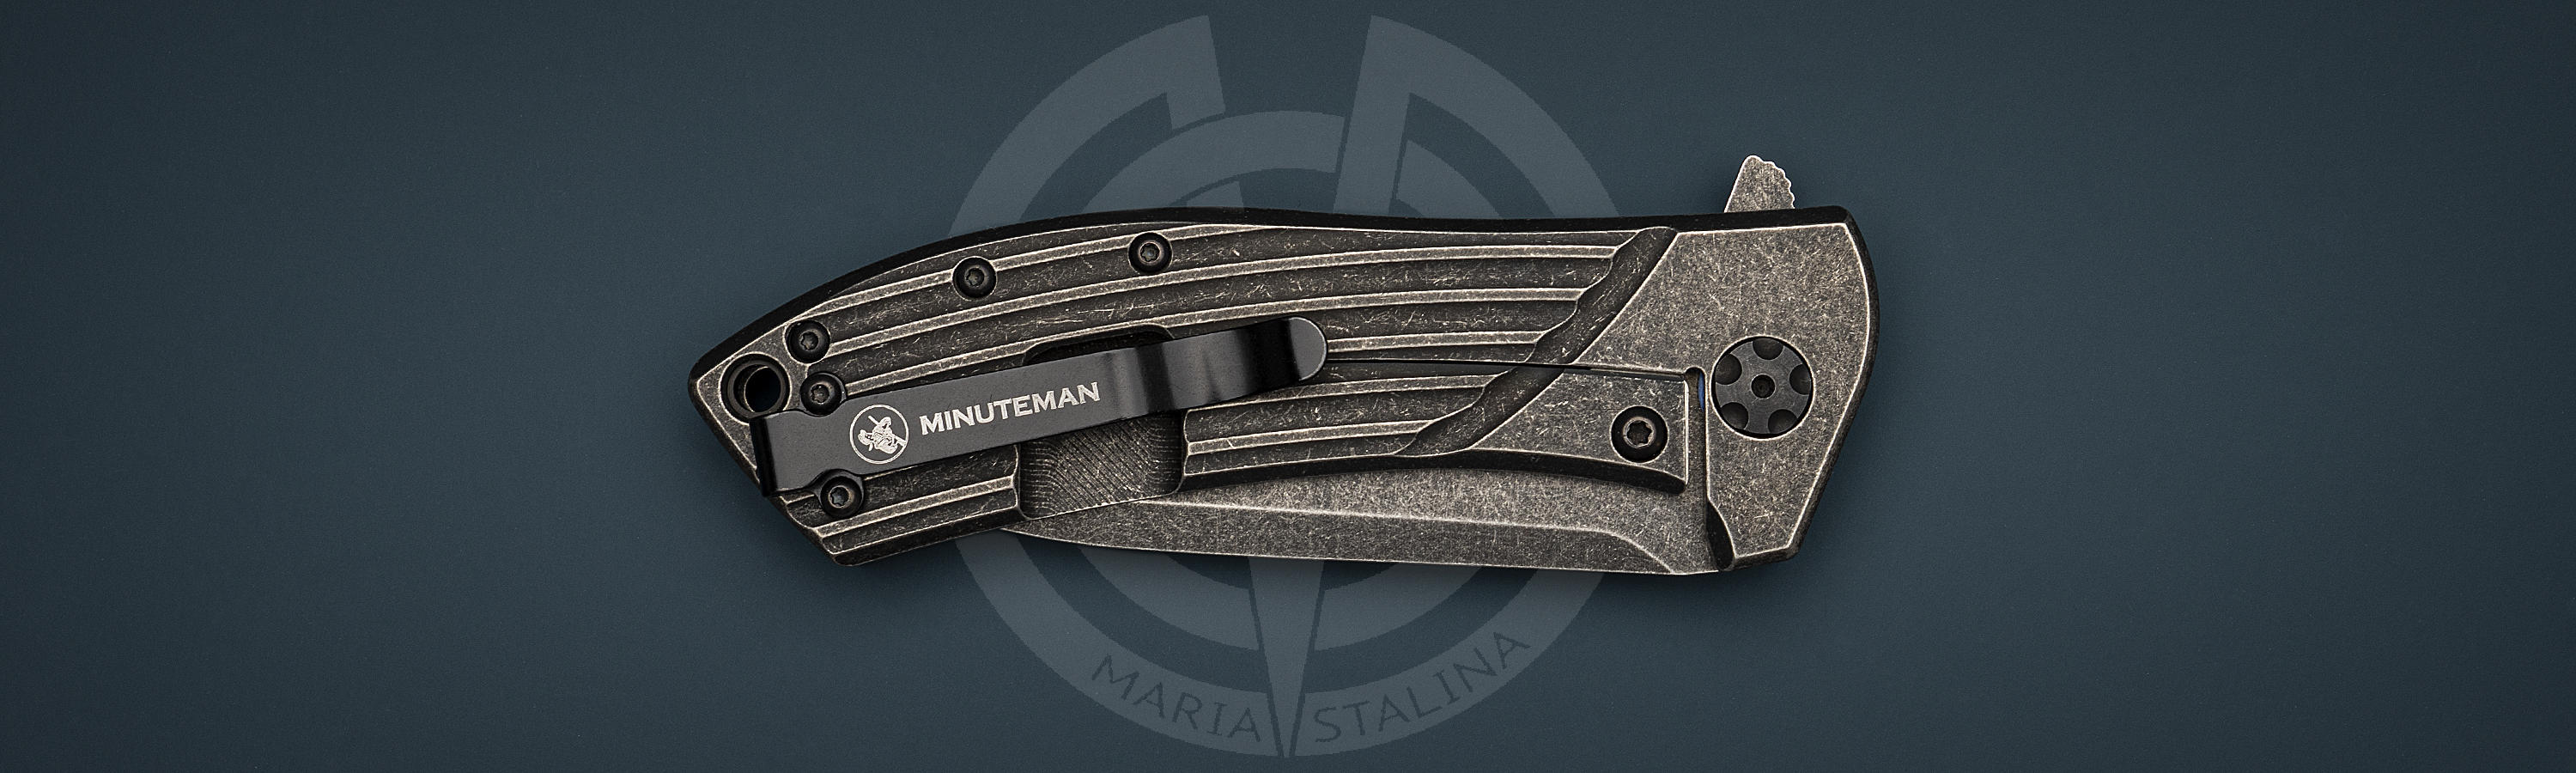 The pocket clip Minuteman